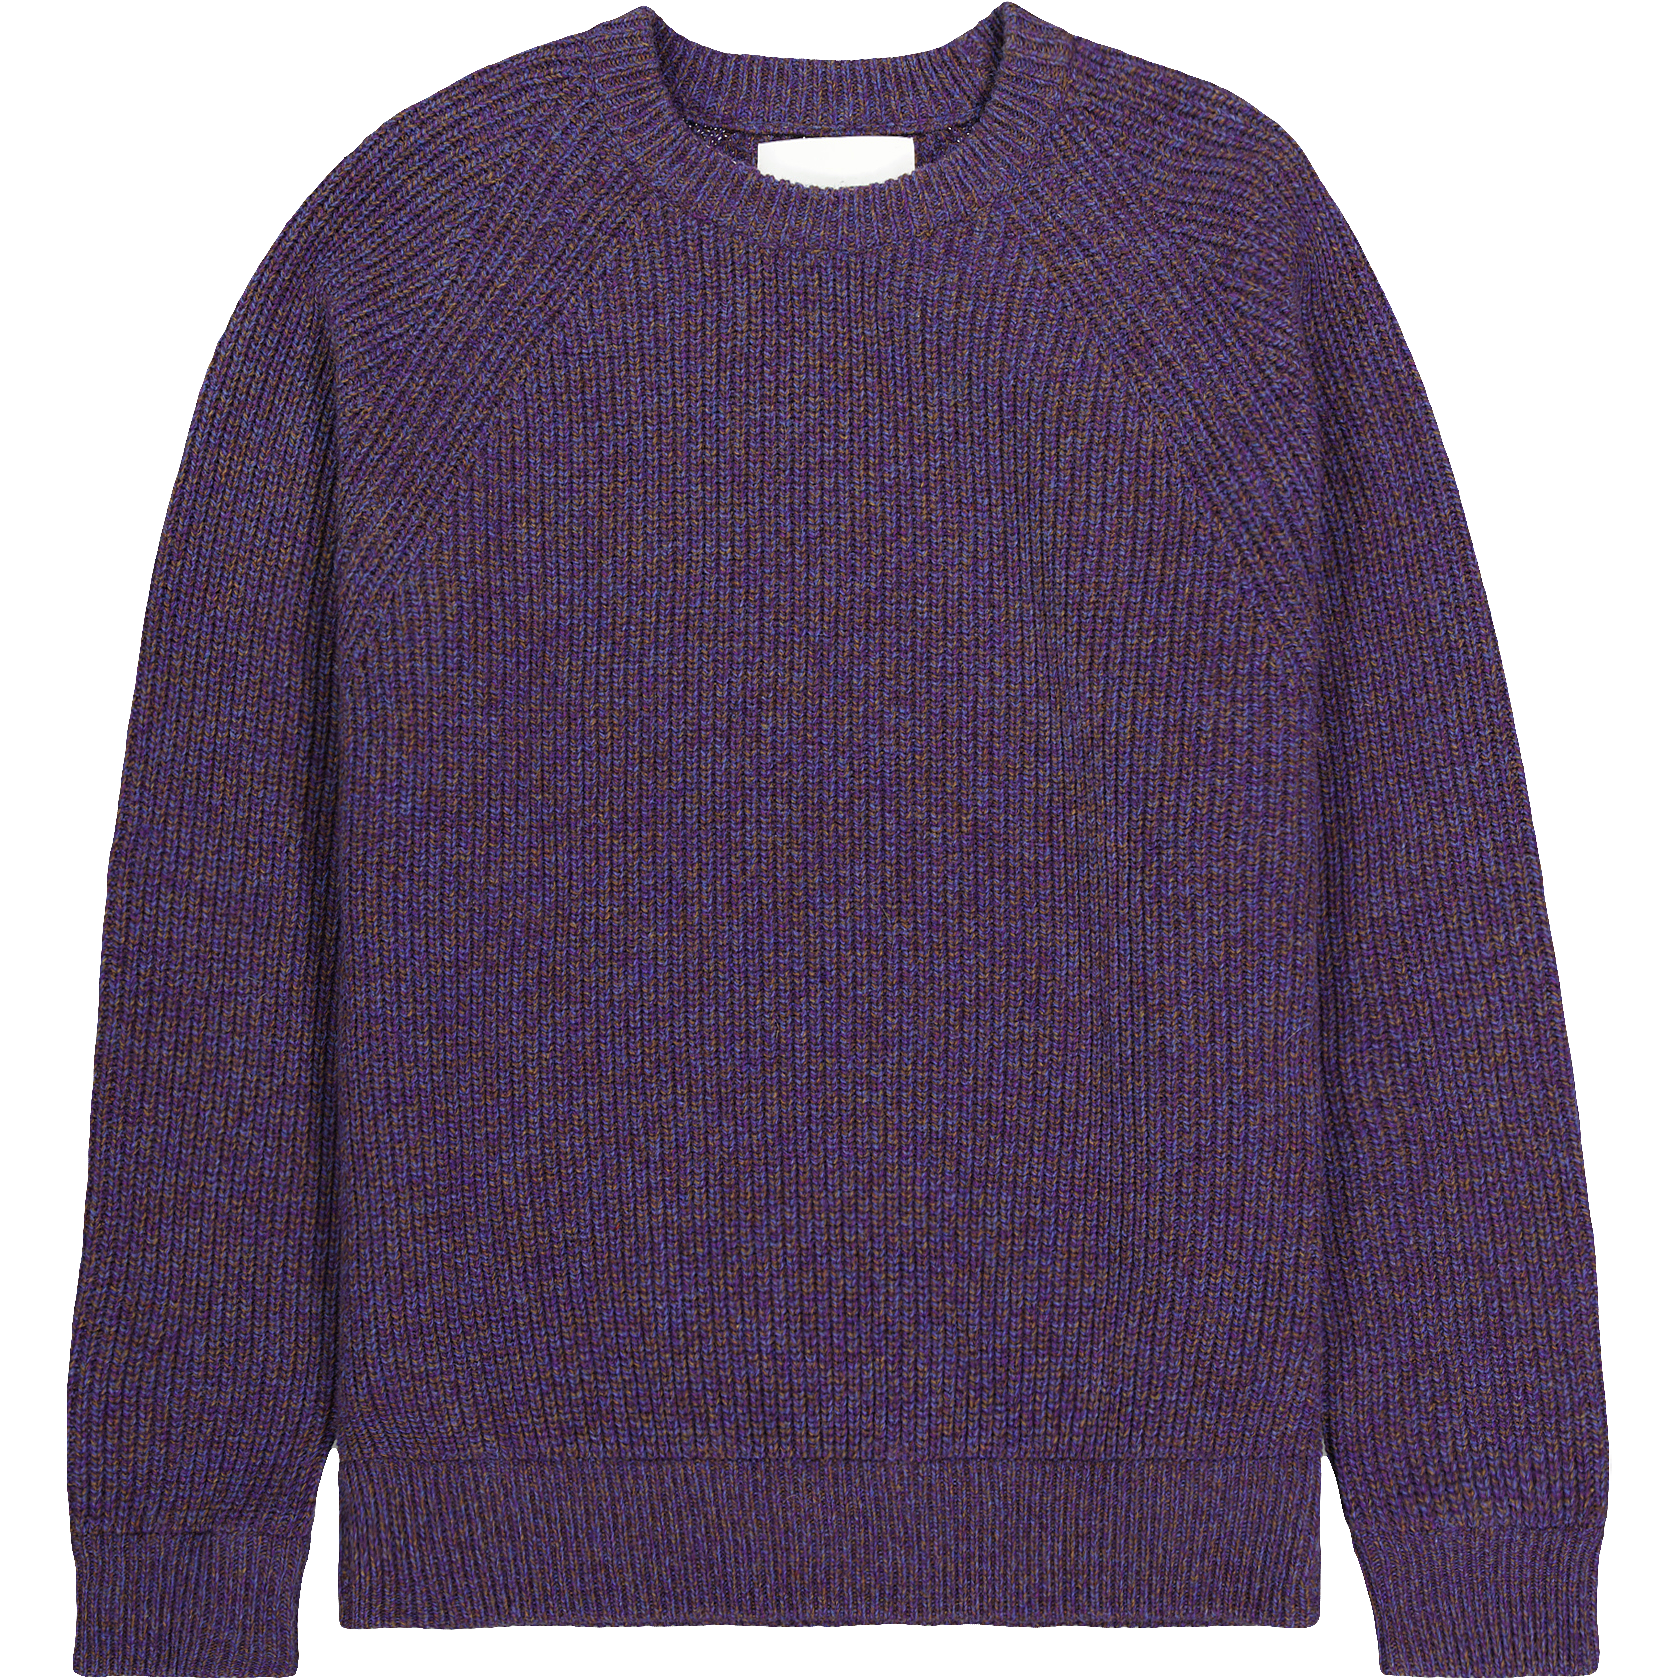 Jacobo Fisherman Rib Knit - Purple Marl